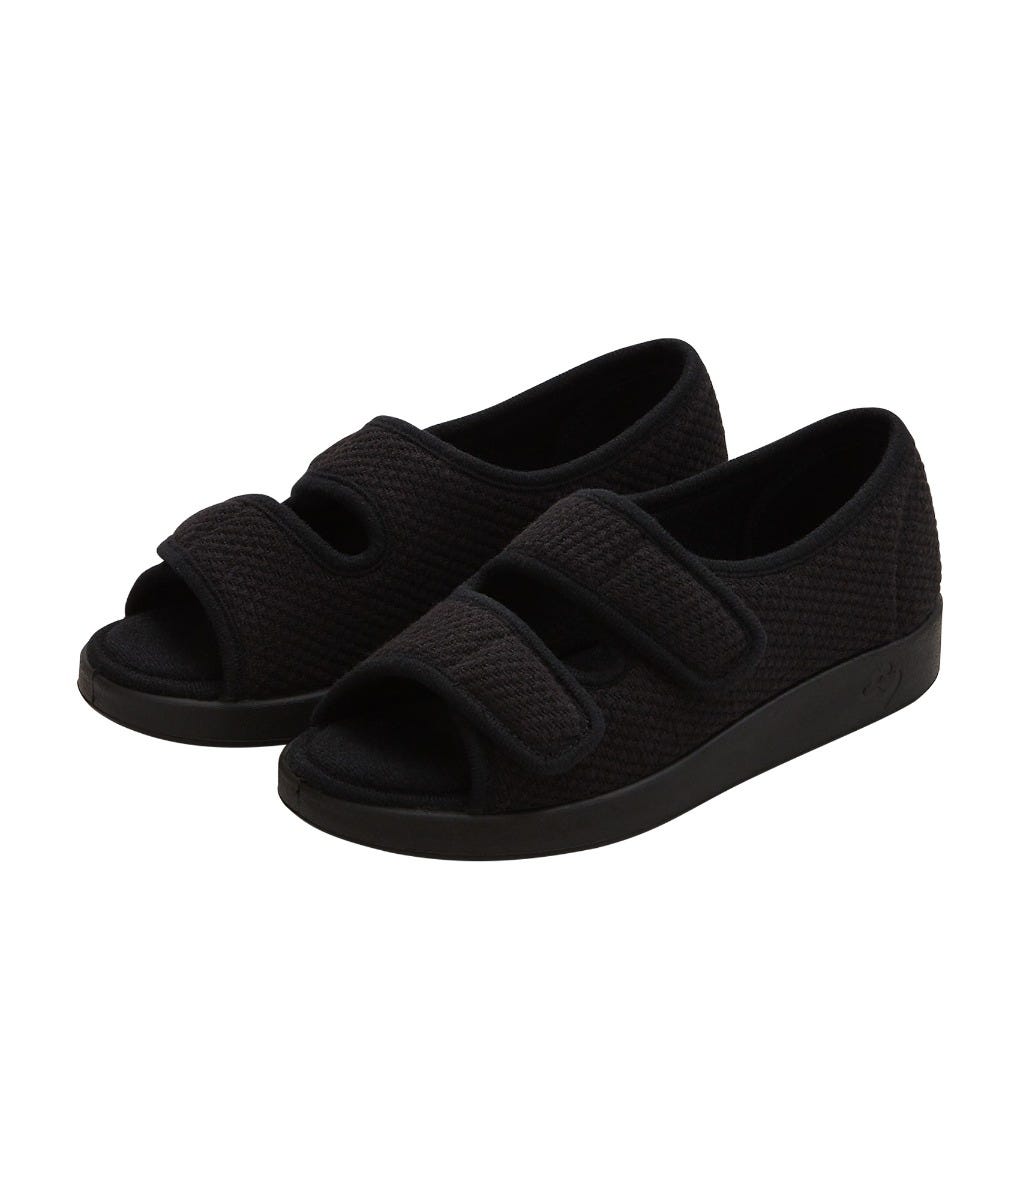 Silverts Women's Easy Closure Sandals - Black - 10